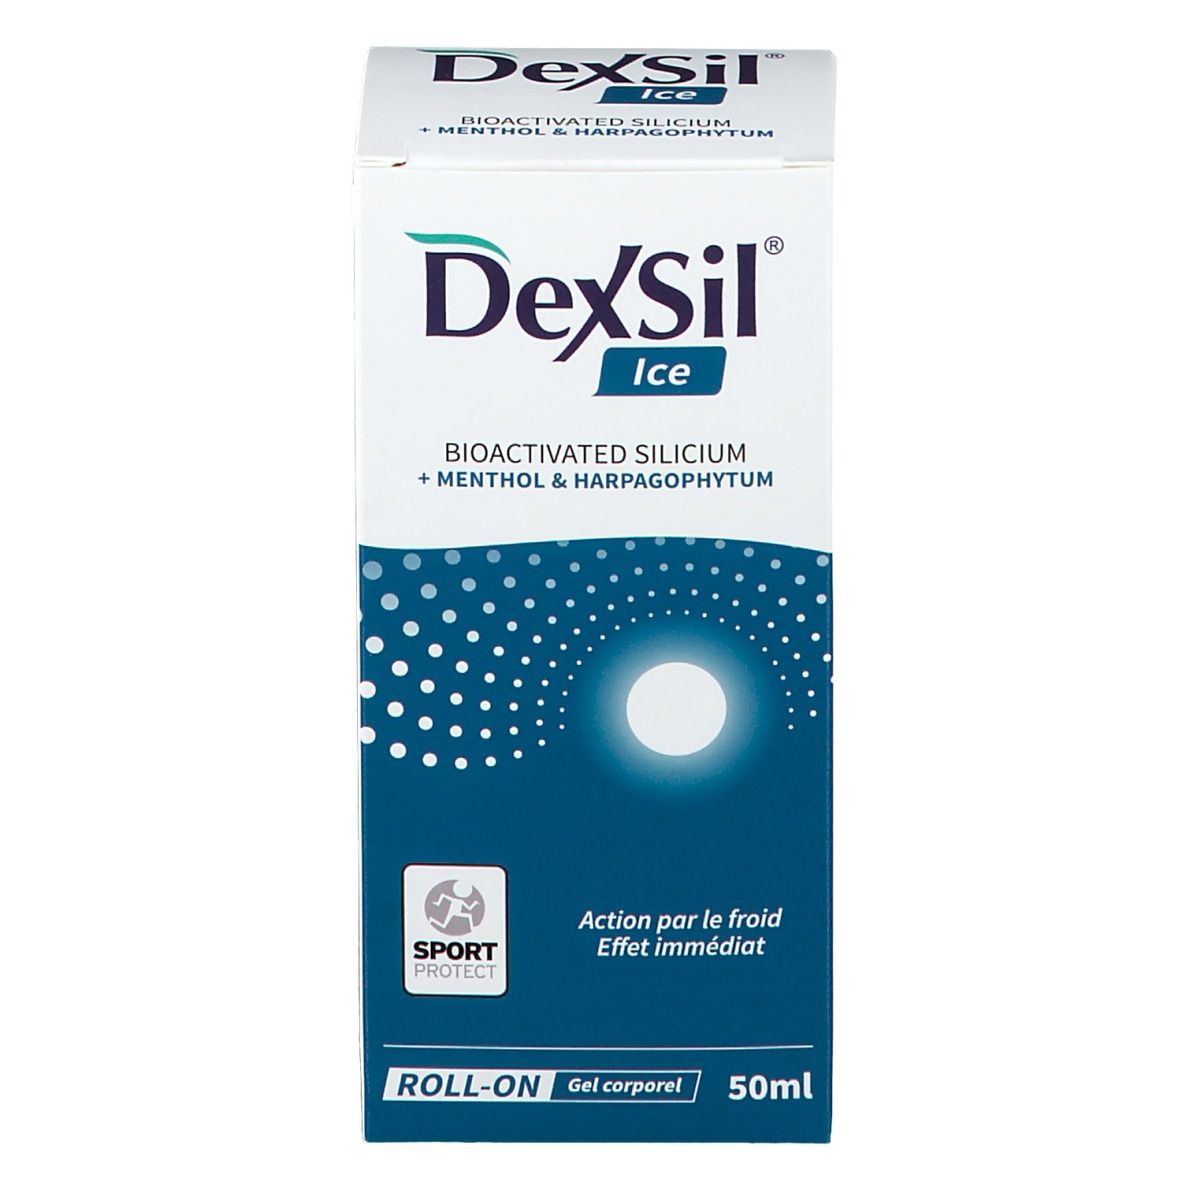 Dexsil Ice Bioactivated Silicum Roll-on Gel corporel